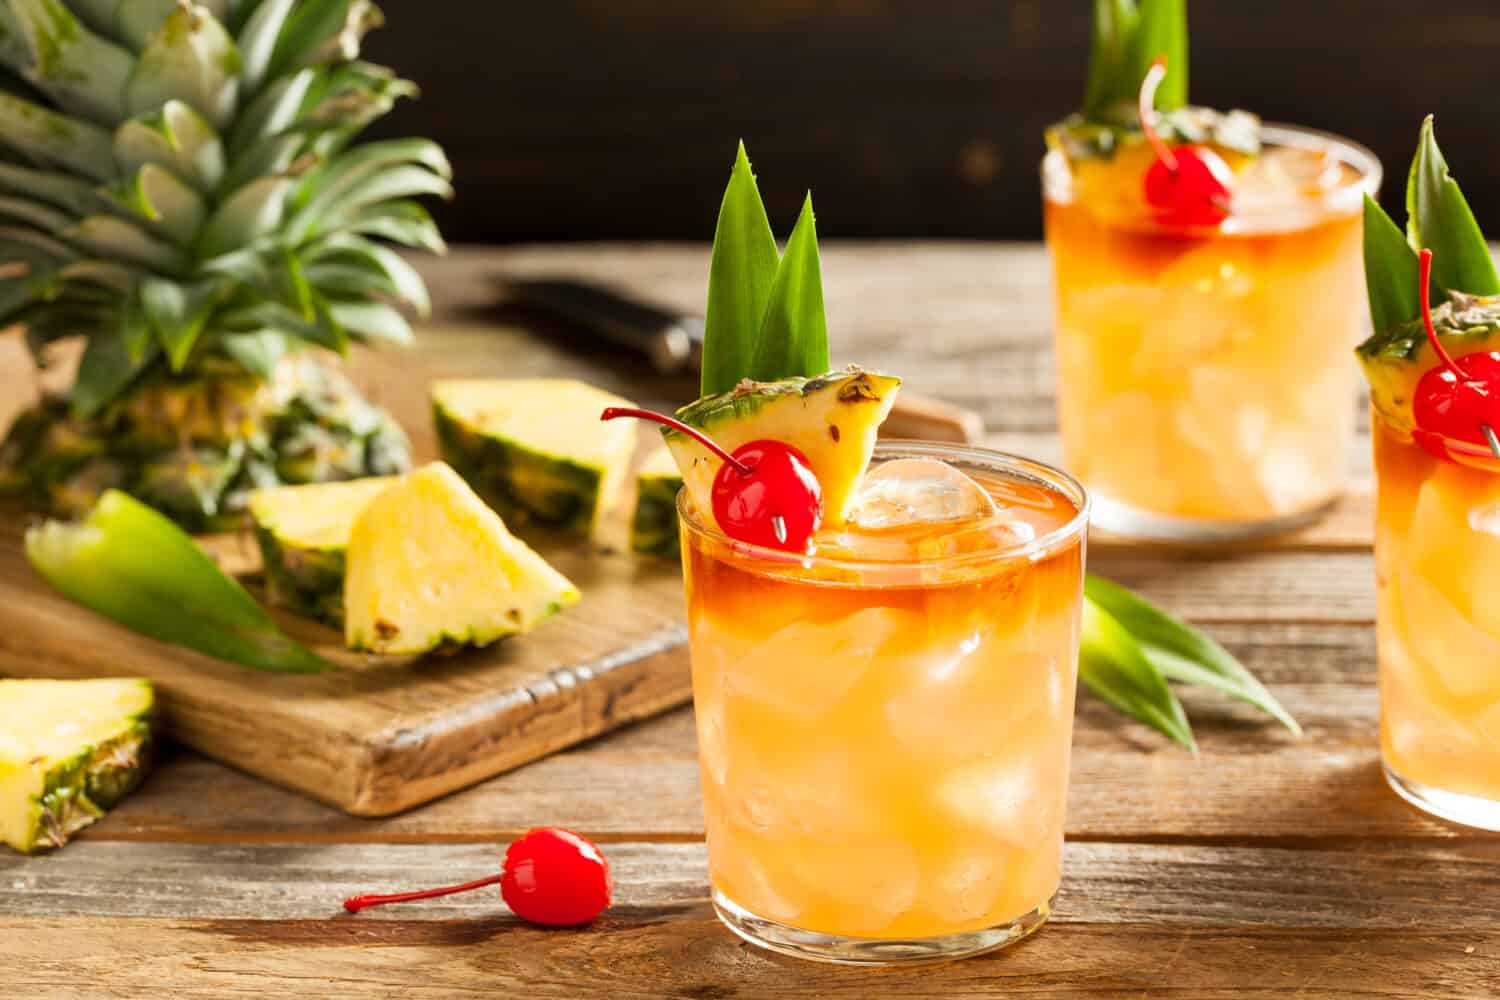 Homemade Mai Tai Cocktail with Pineapple Cherry and Rum